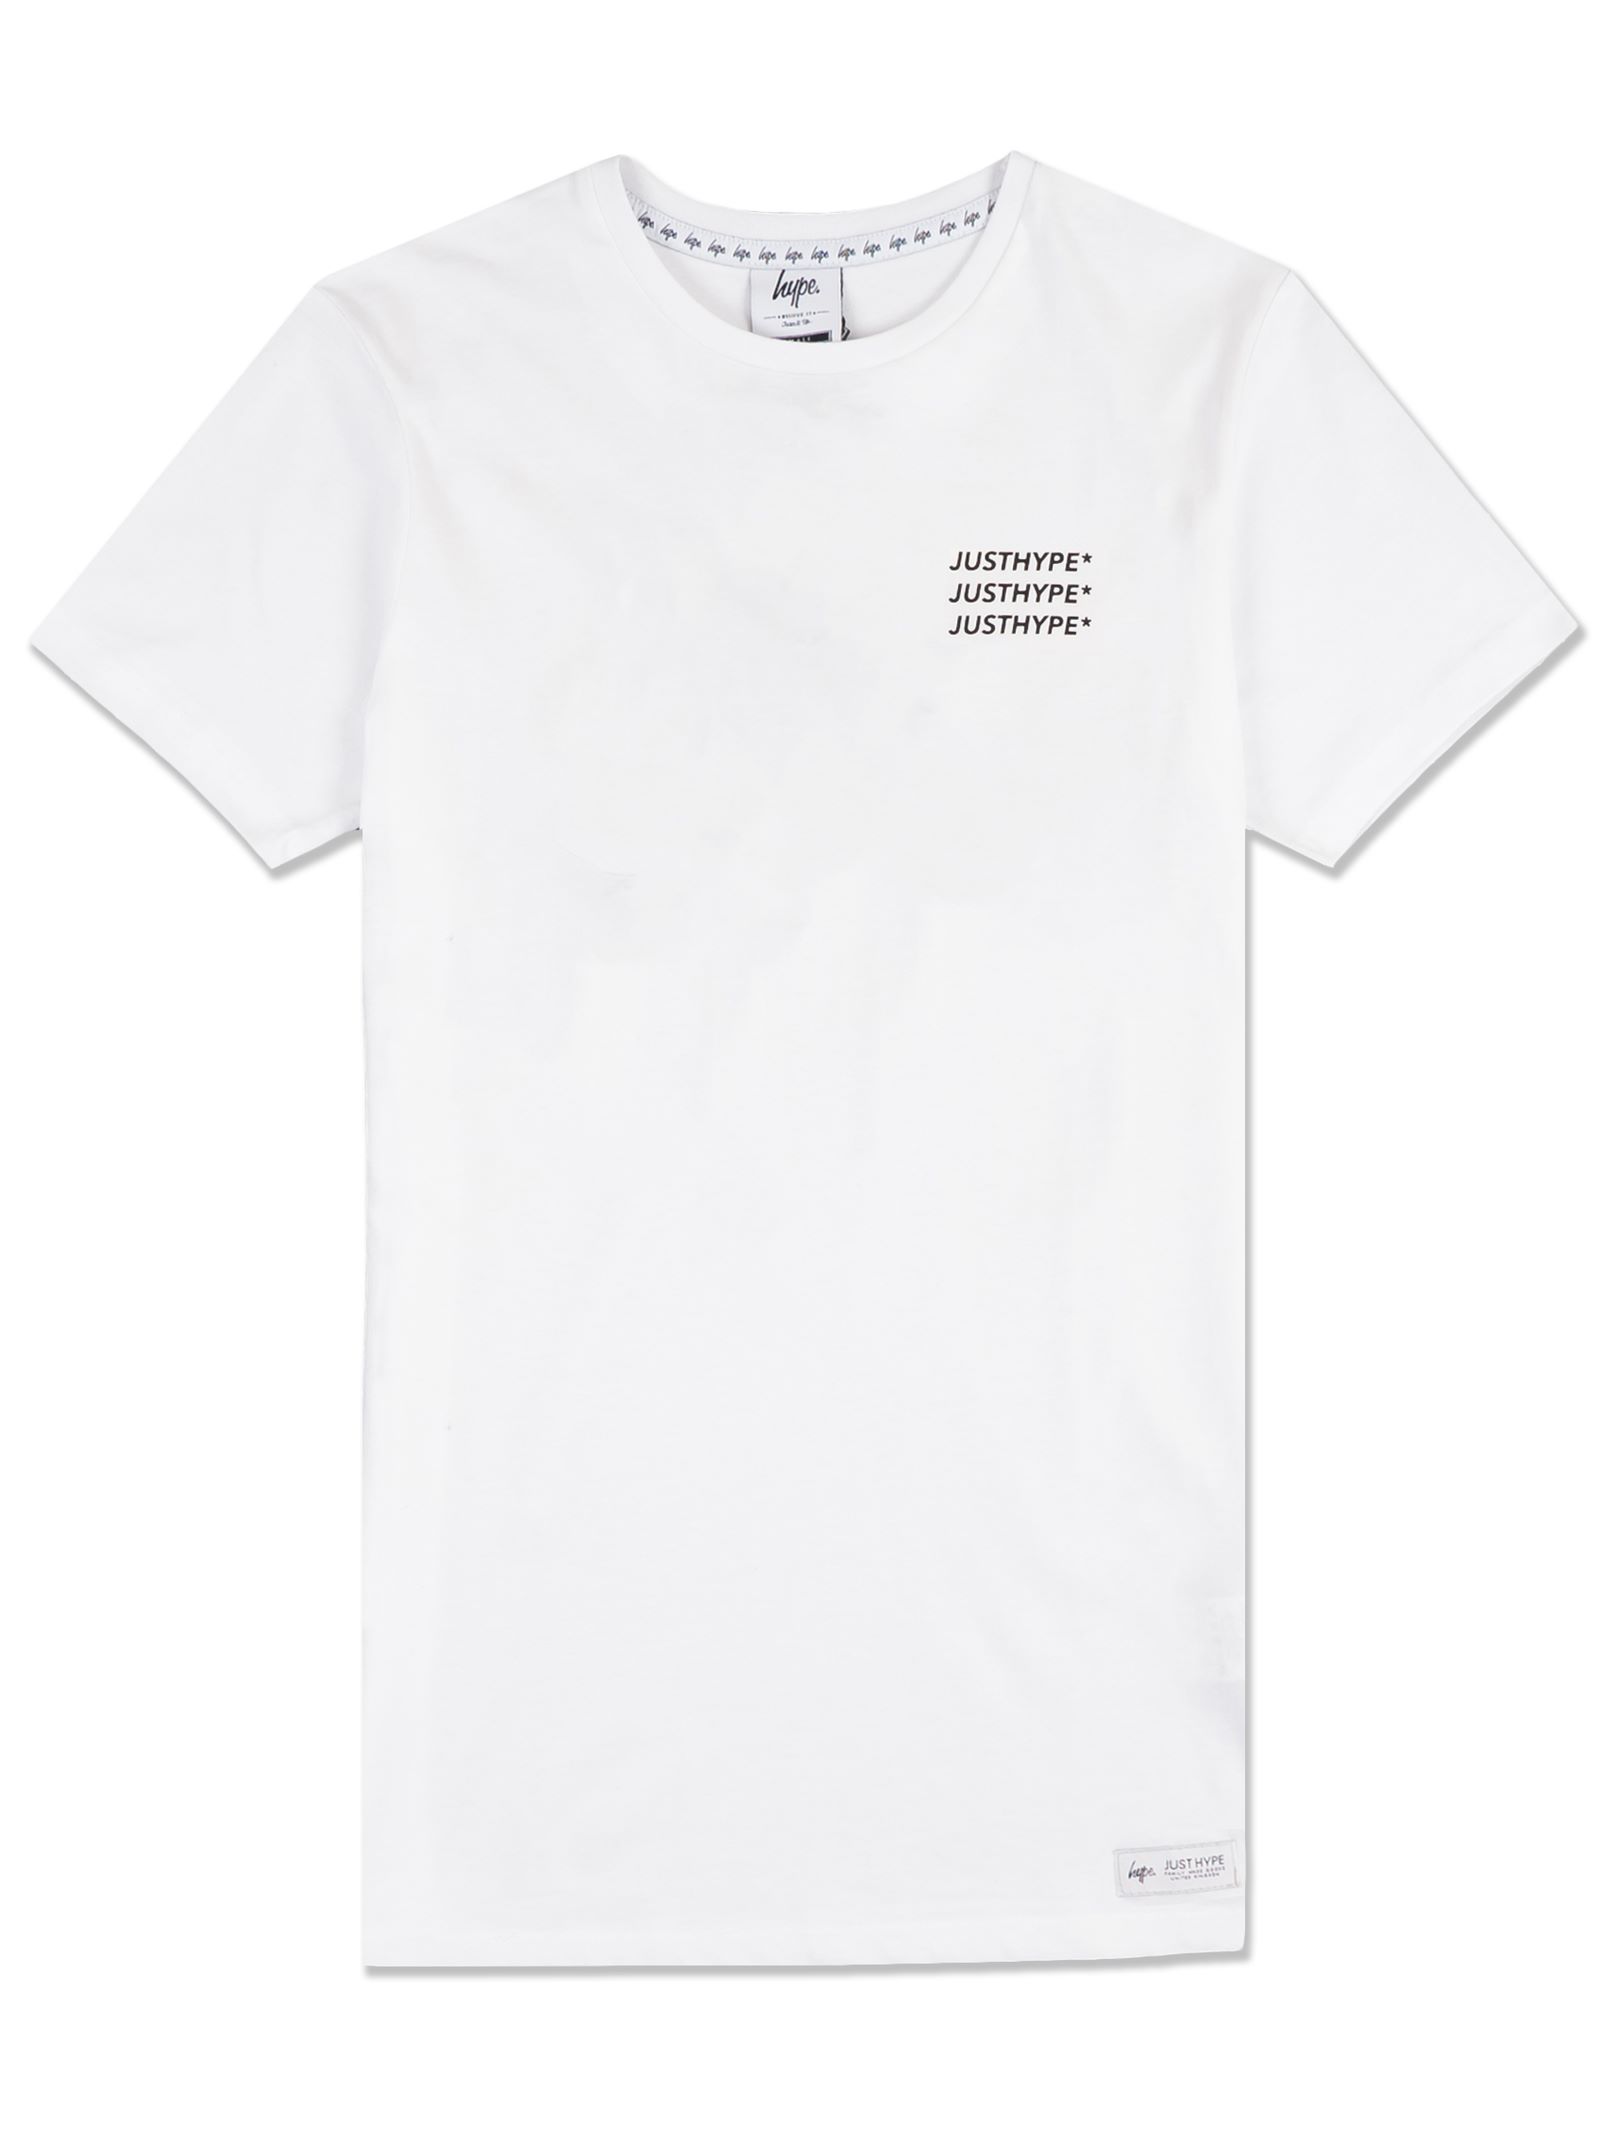 Hype Pastel Pallette T-Shirt in White | Dapper Street